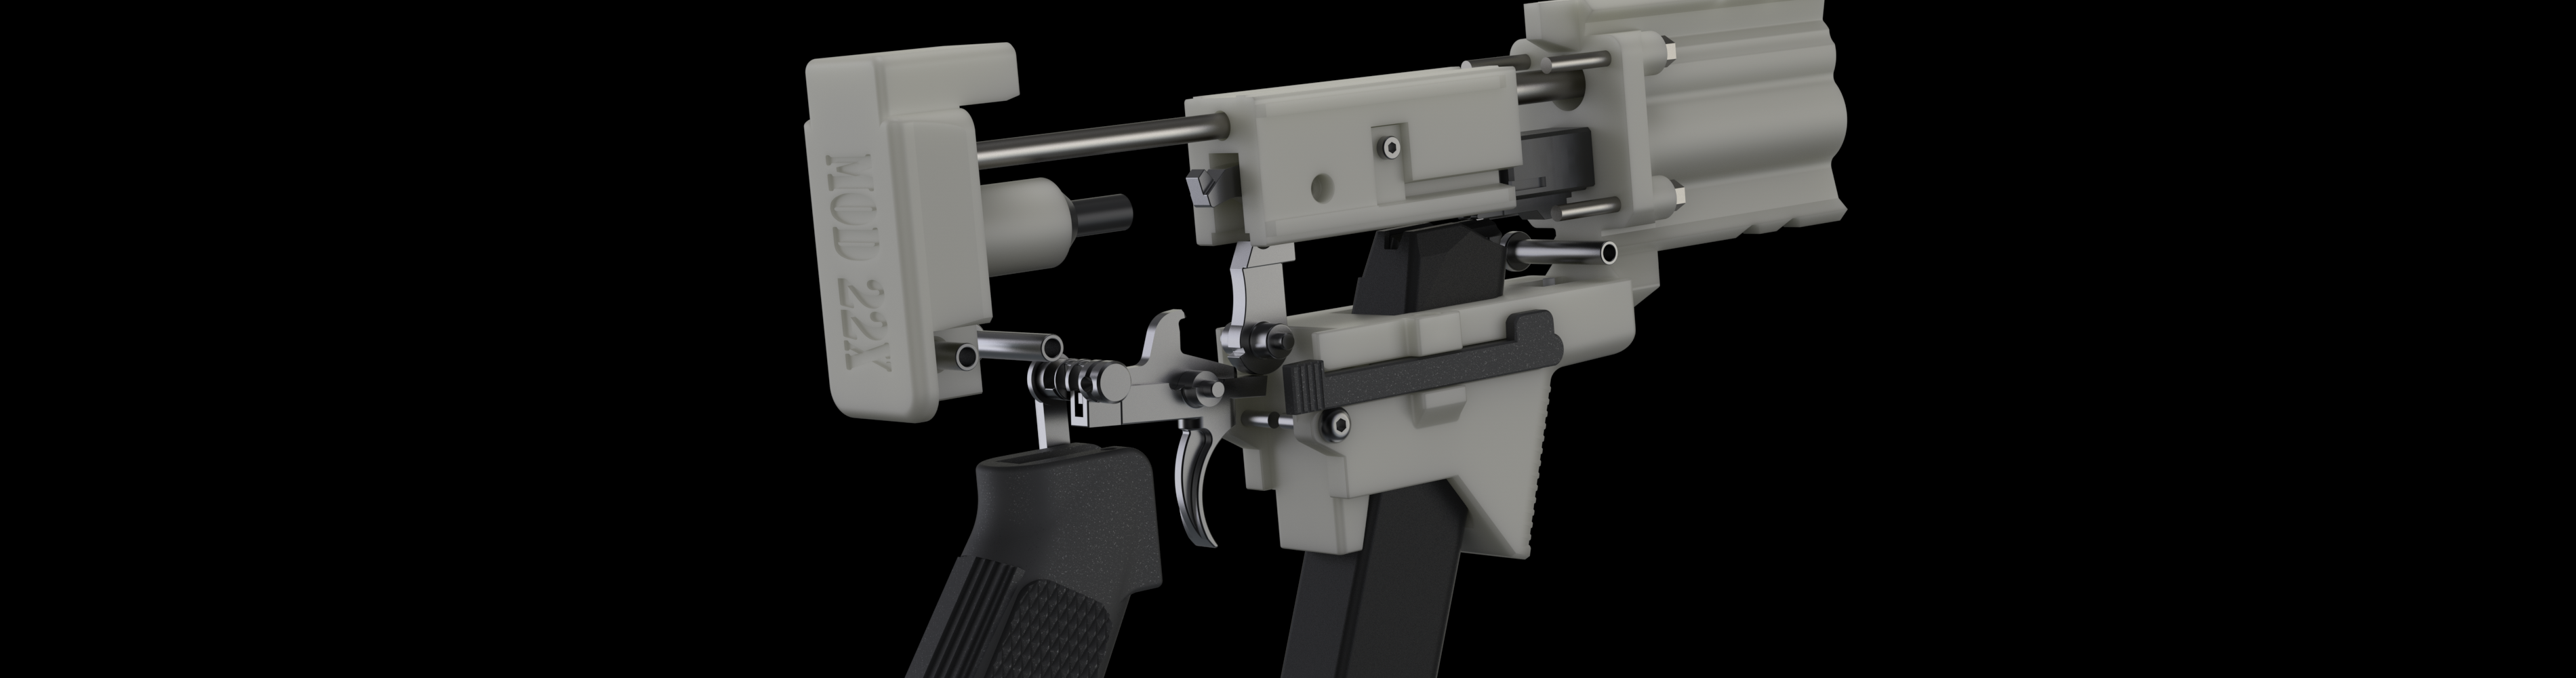 MOD-22X .22 Caliber Pistol | DEFCAD